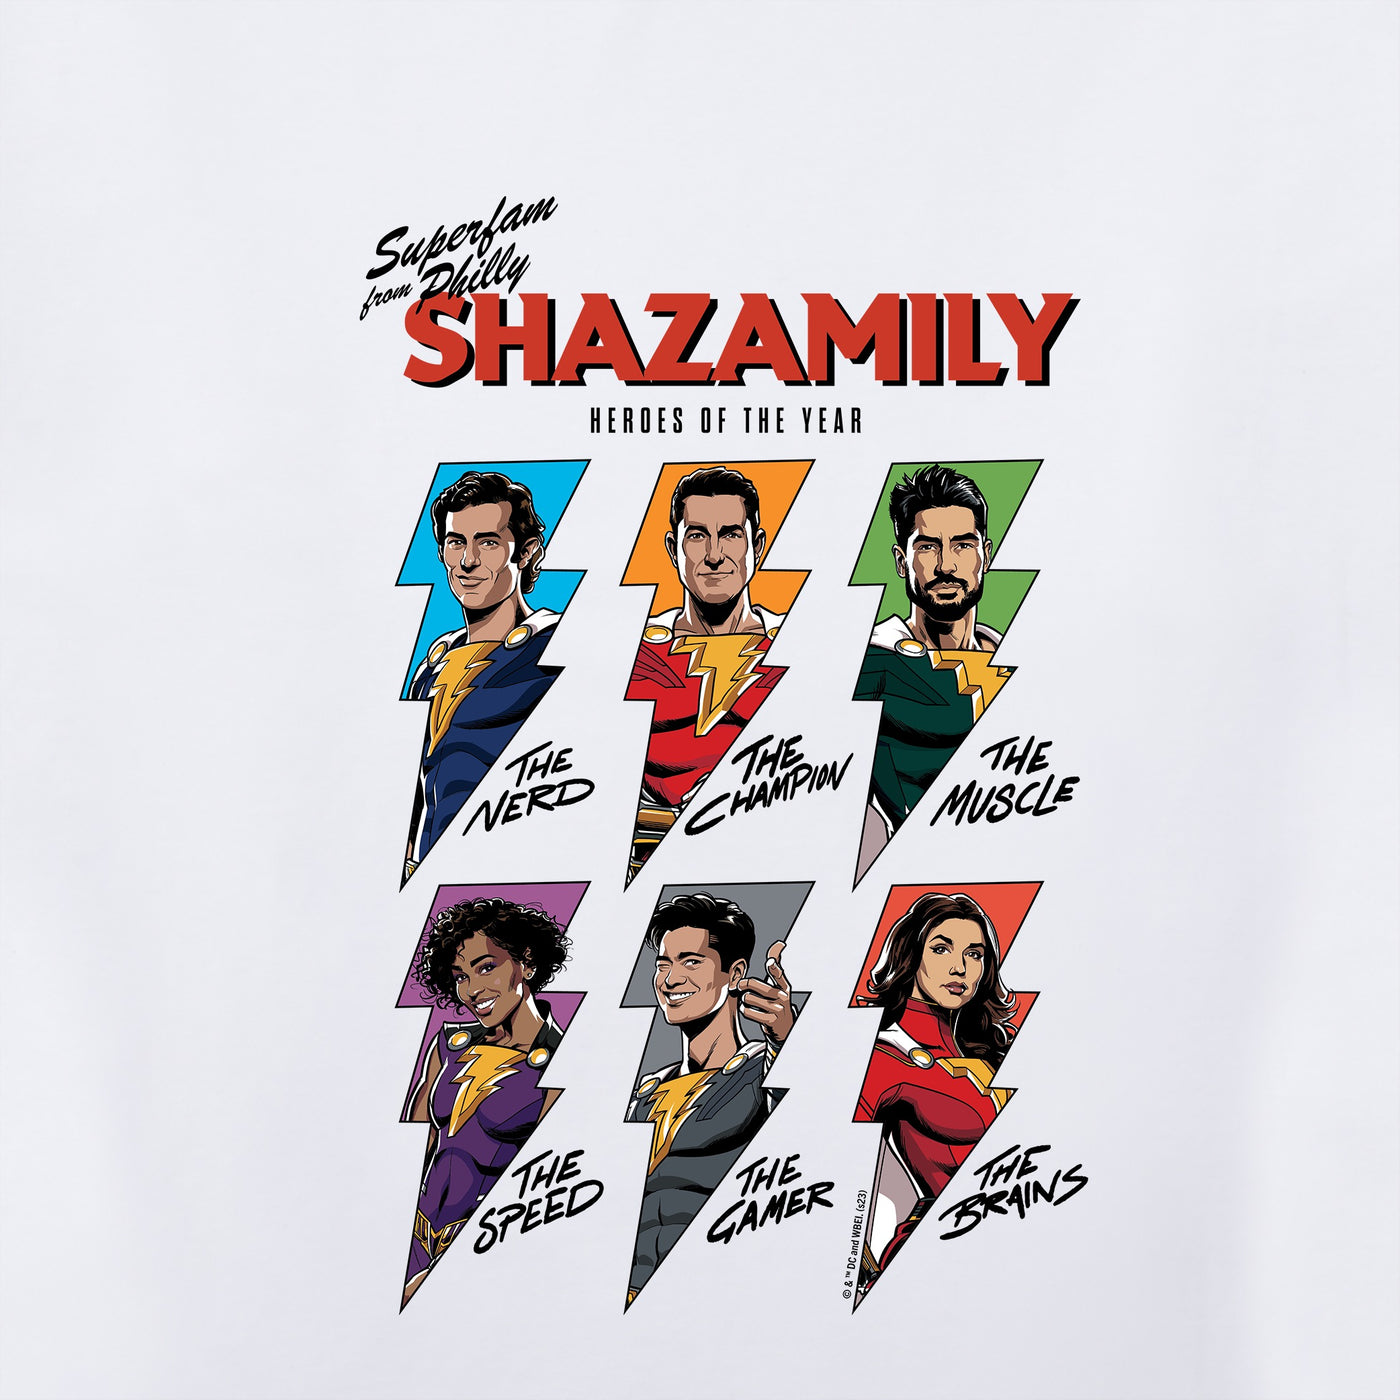 Shazam! Shazamily Men's Short Sleeve T-Shirt